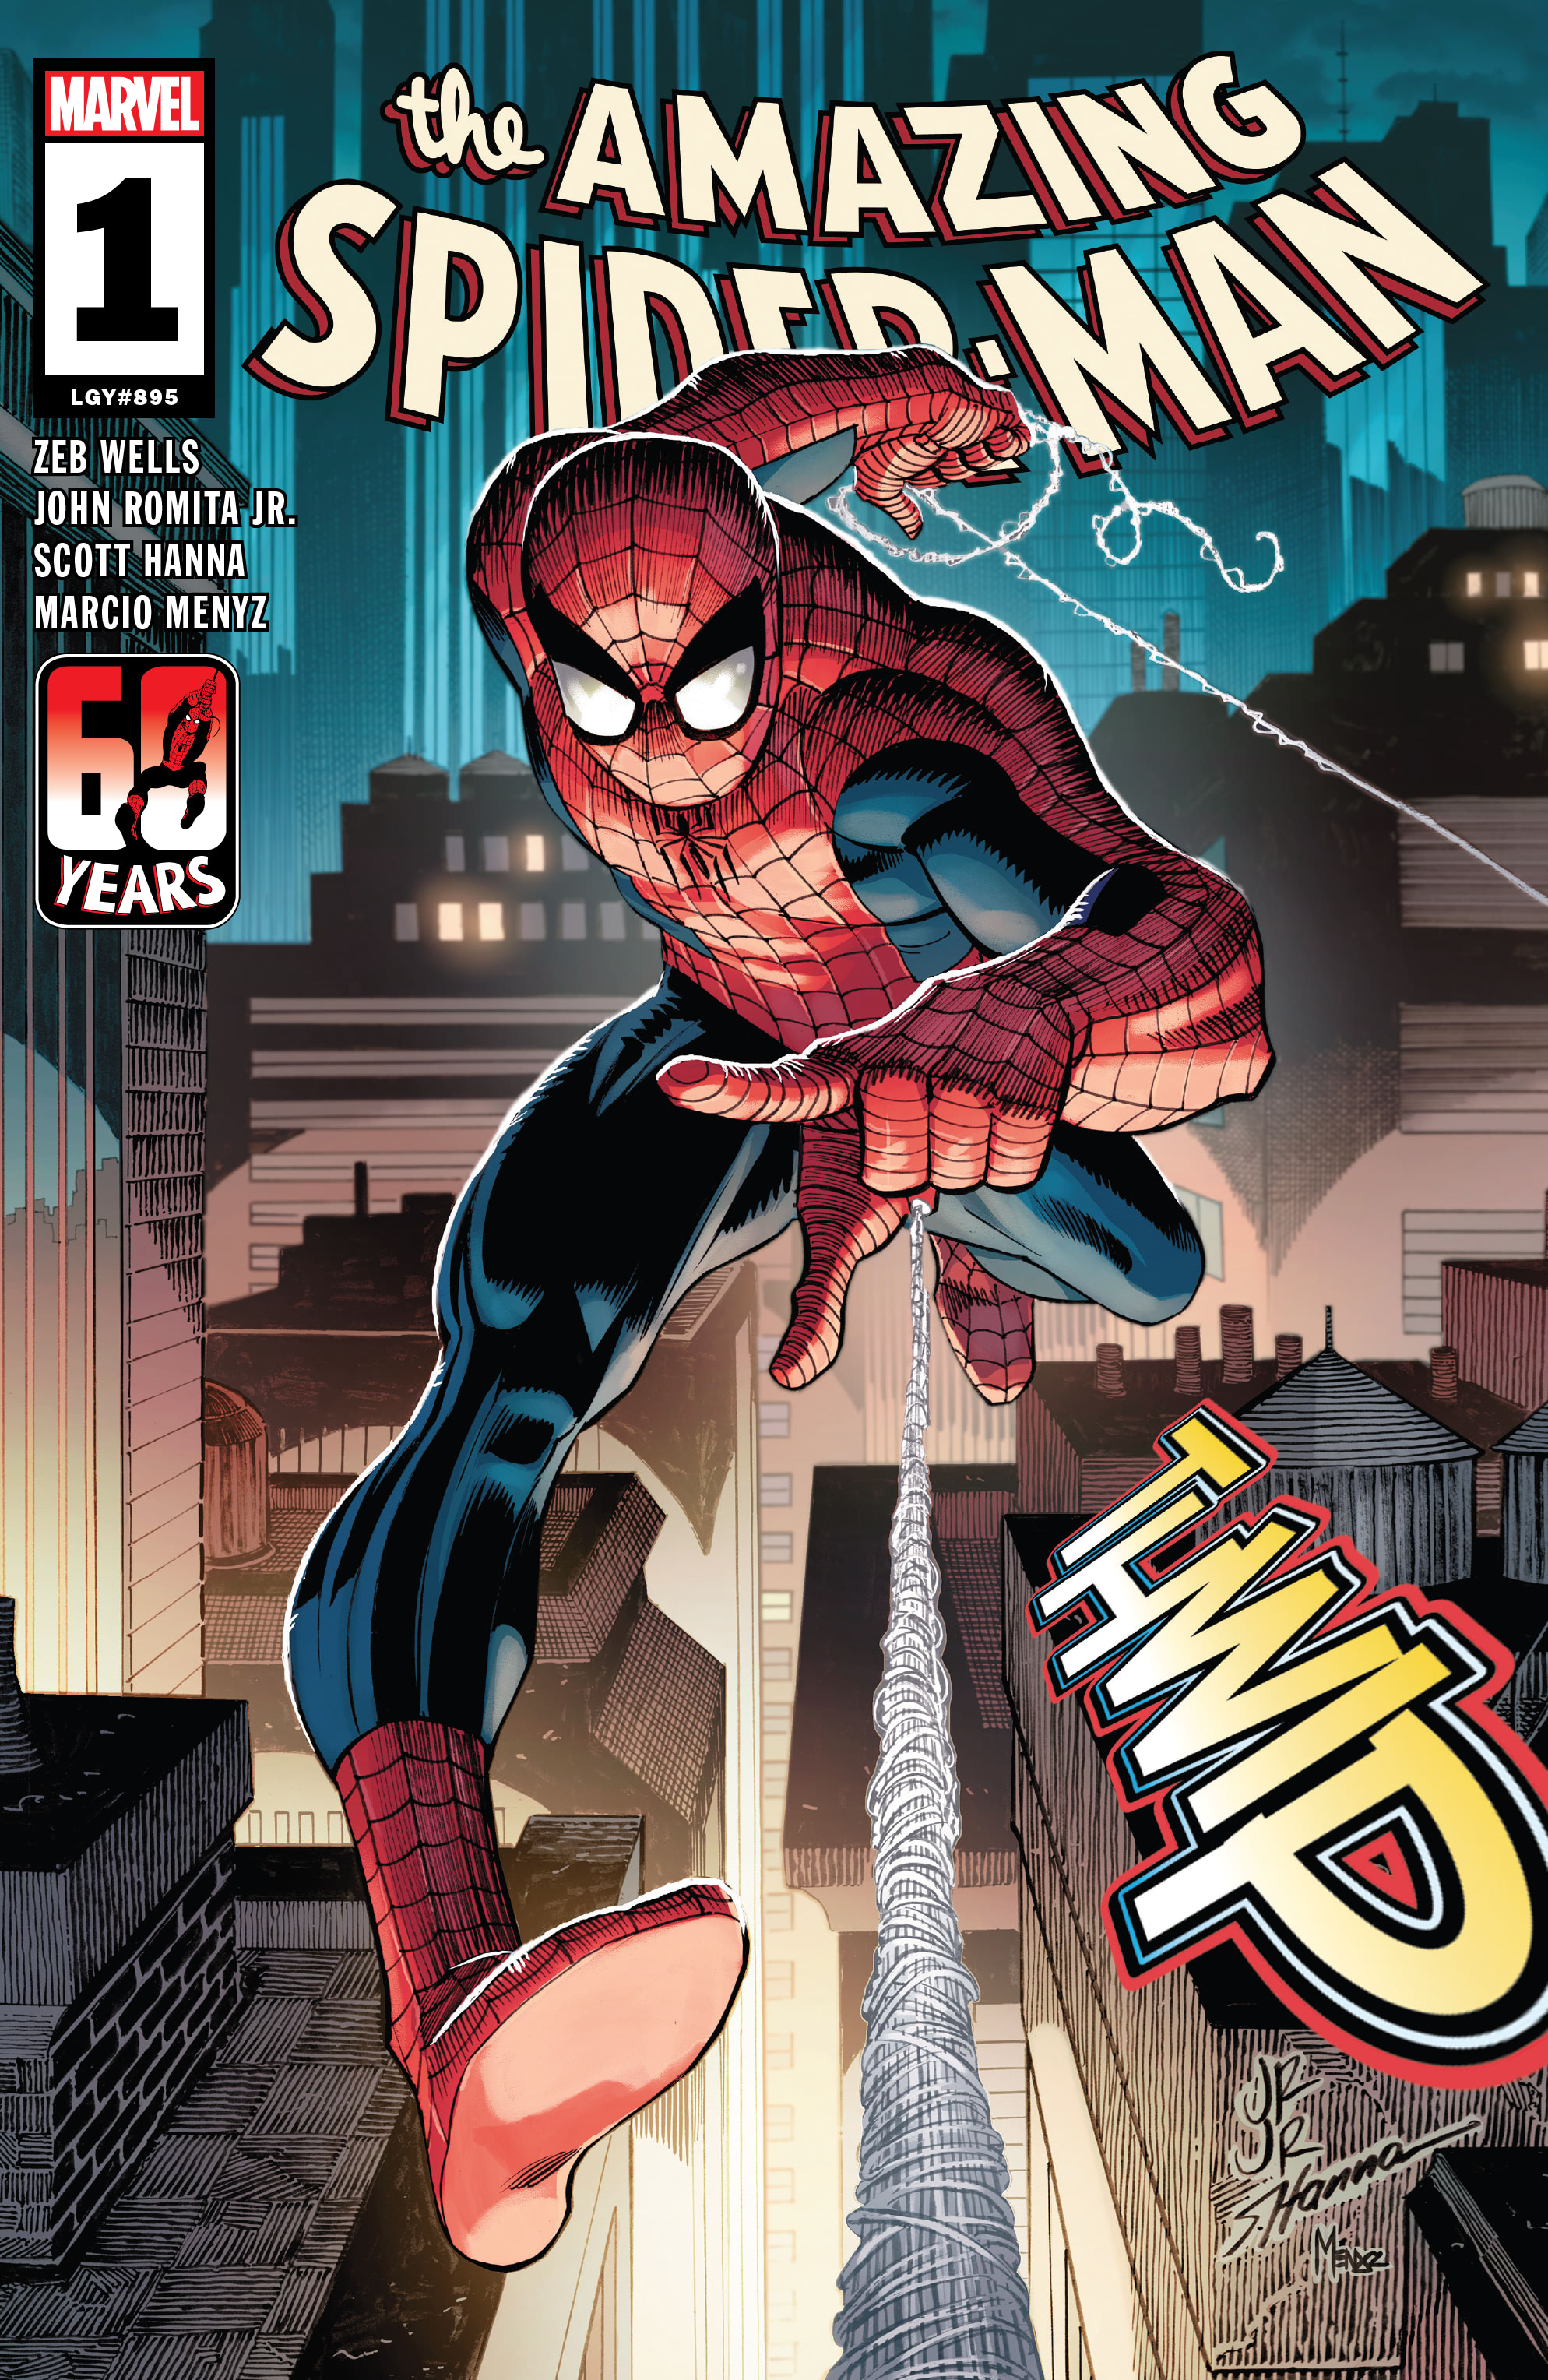 Spider man comics to read online